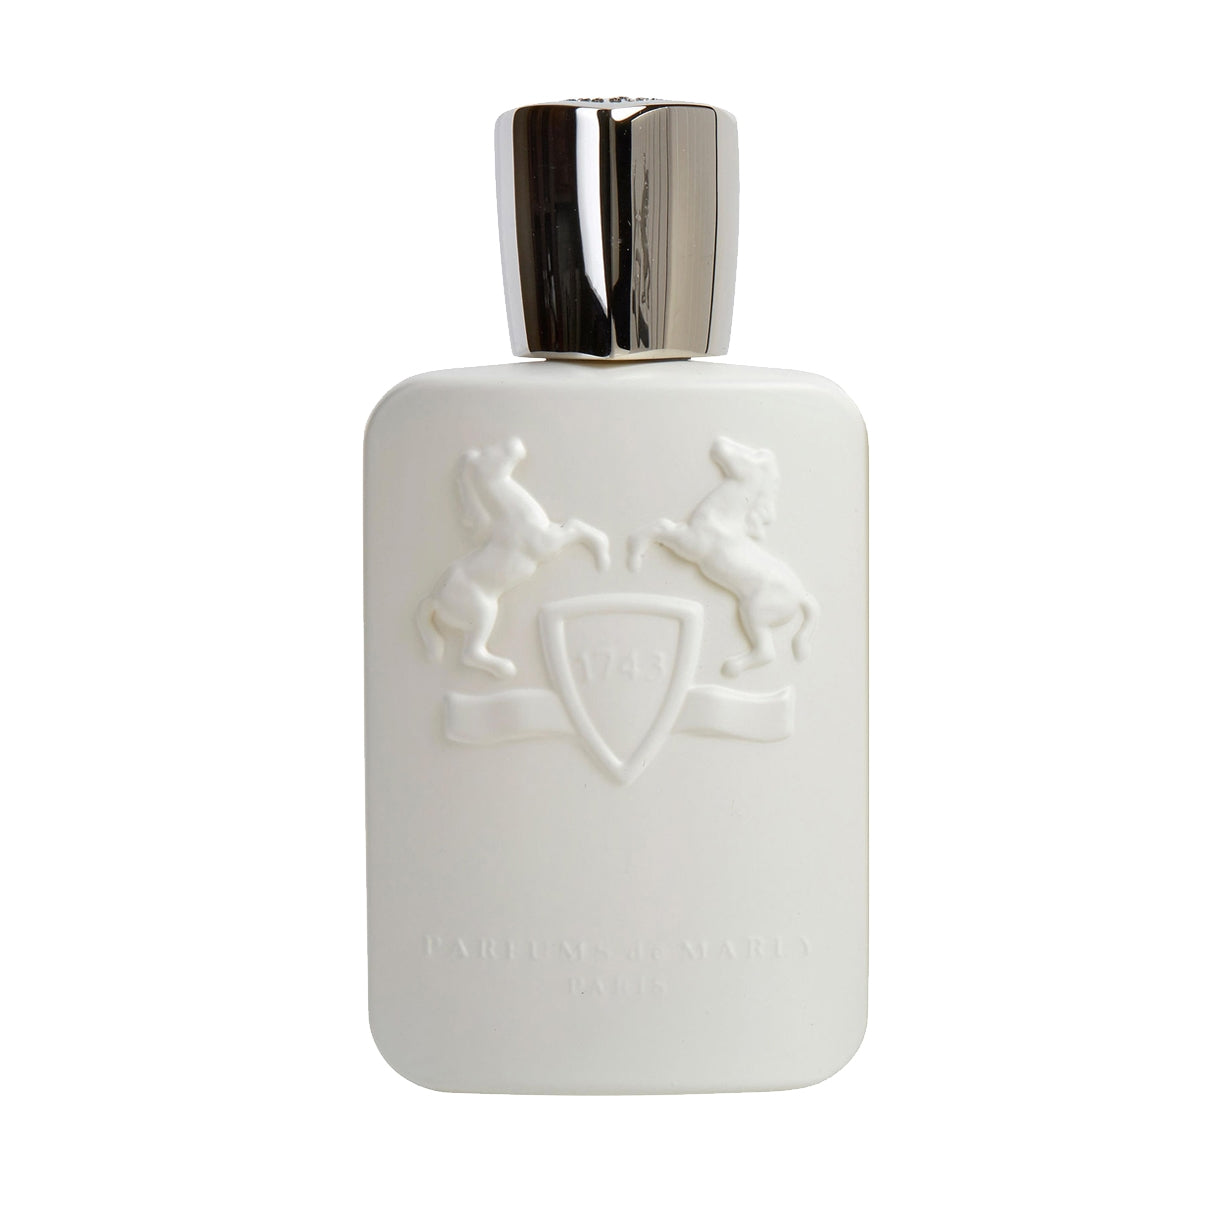 Parfums de Marly Galloway Eau Unisex – Perfume & Cologne Decant Samples